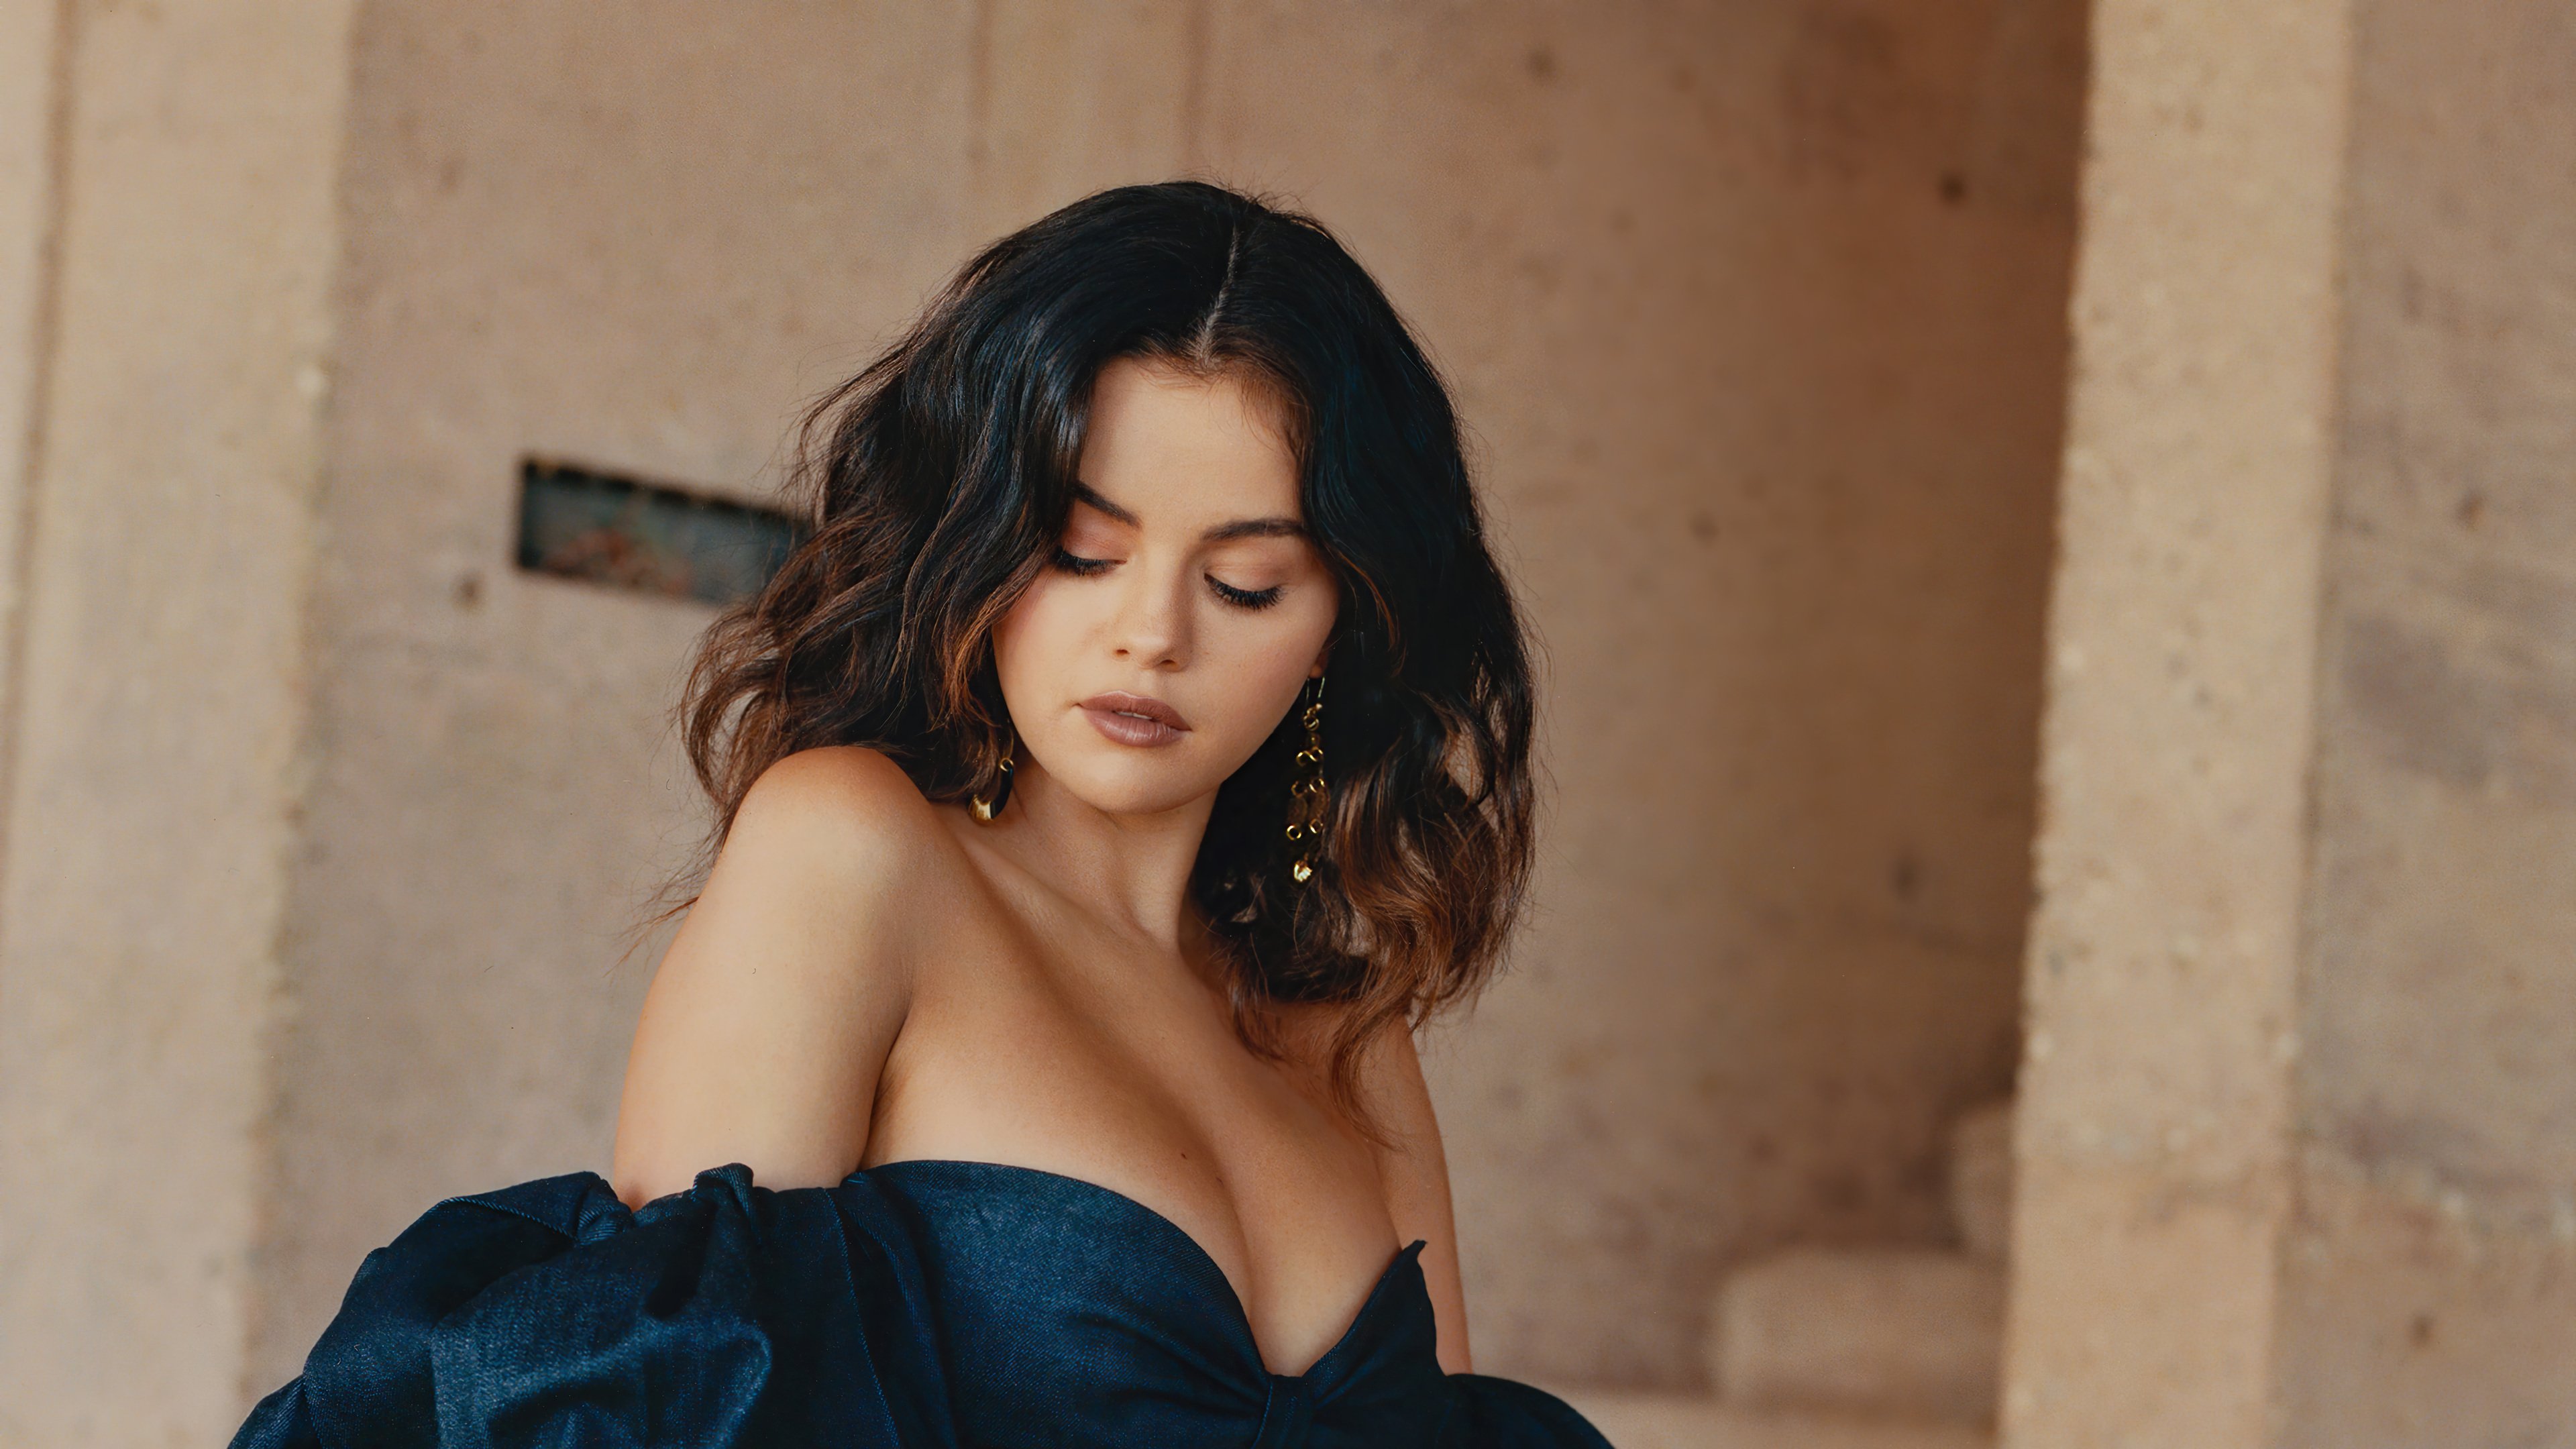 Fondos de pantalla Selena Gomez vestido azul